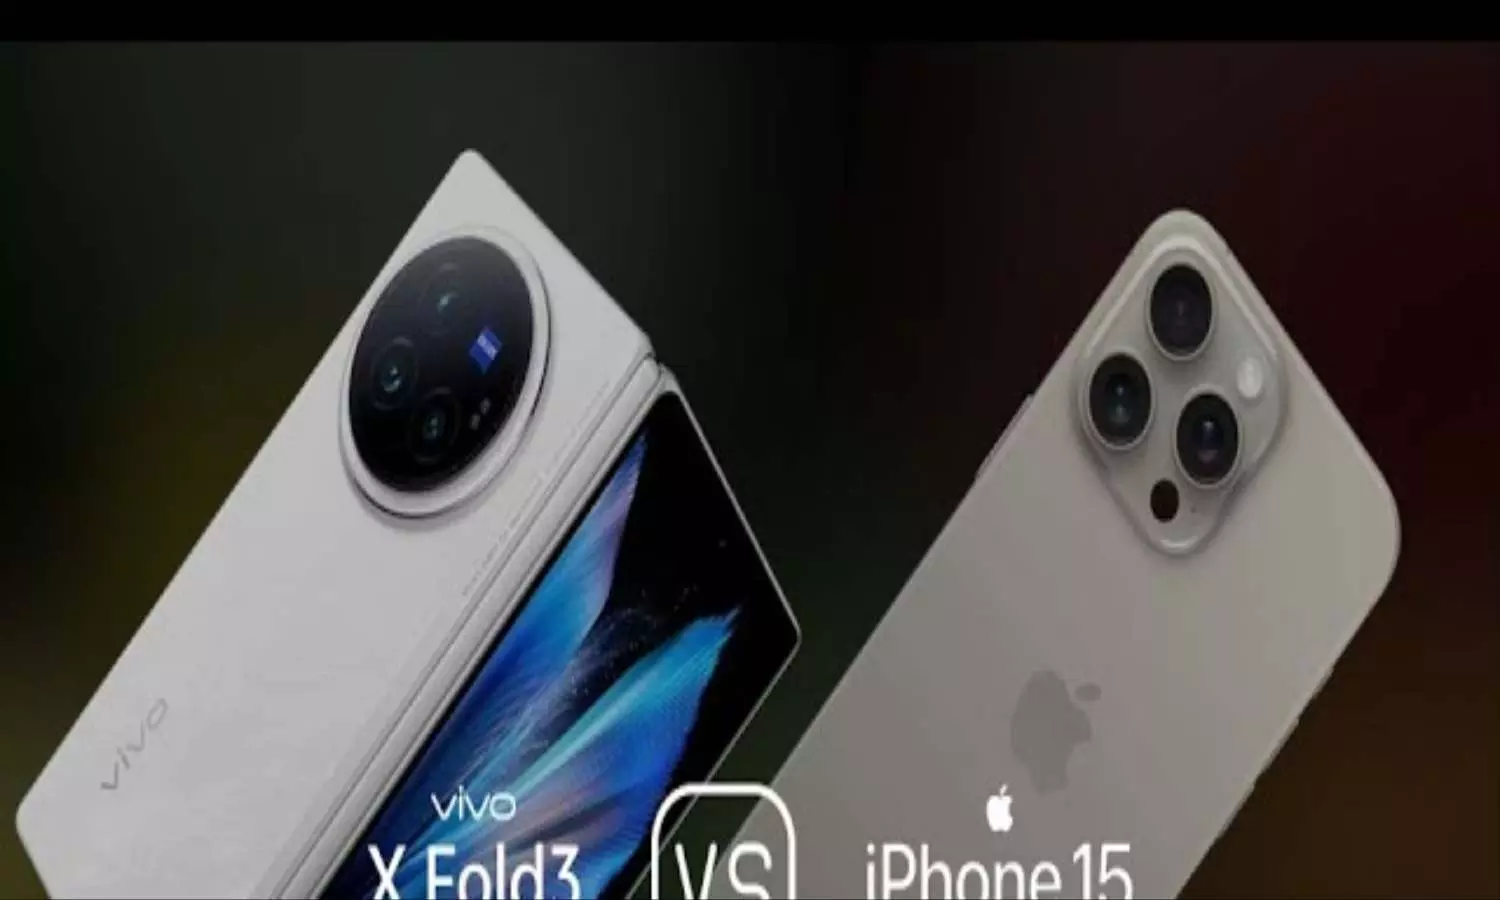 Vivo X Fold 3 Pro vs iPhone 15